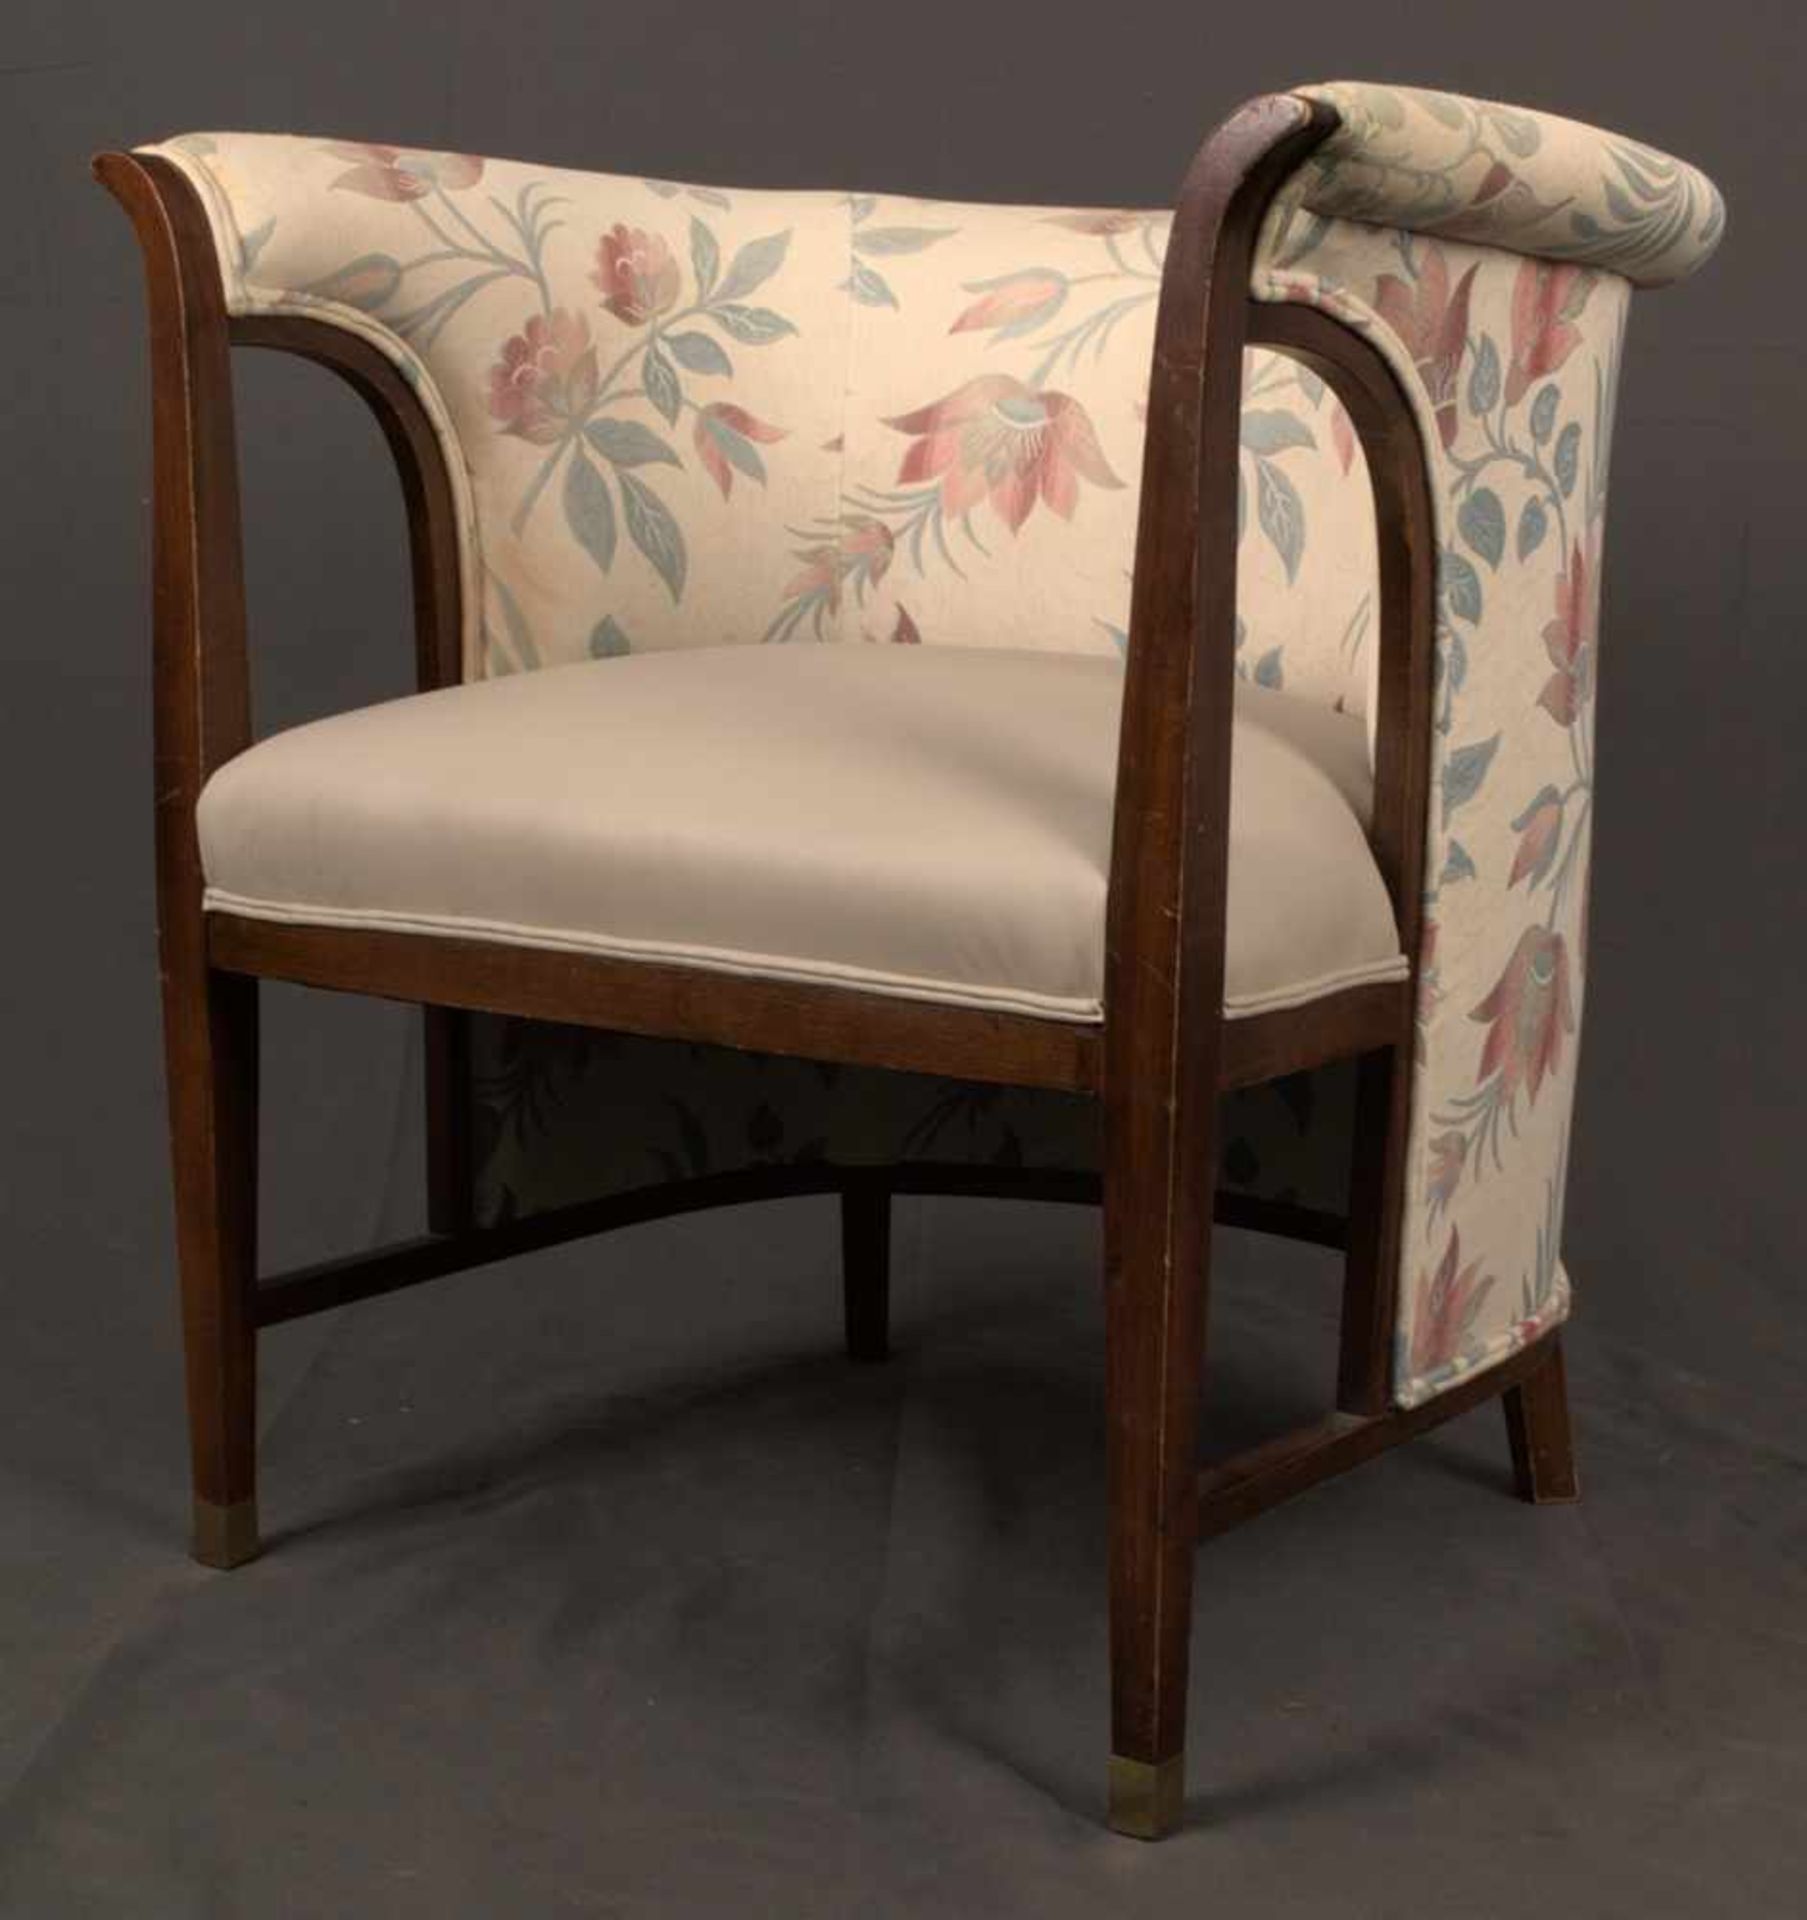 Wiener Polstersessel, hufeisenförmiges, gepolstertes Sesselgestell mit geraden, knatigen Beinen (die